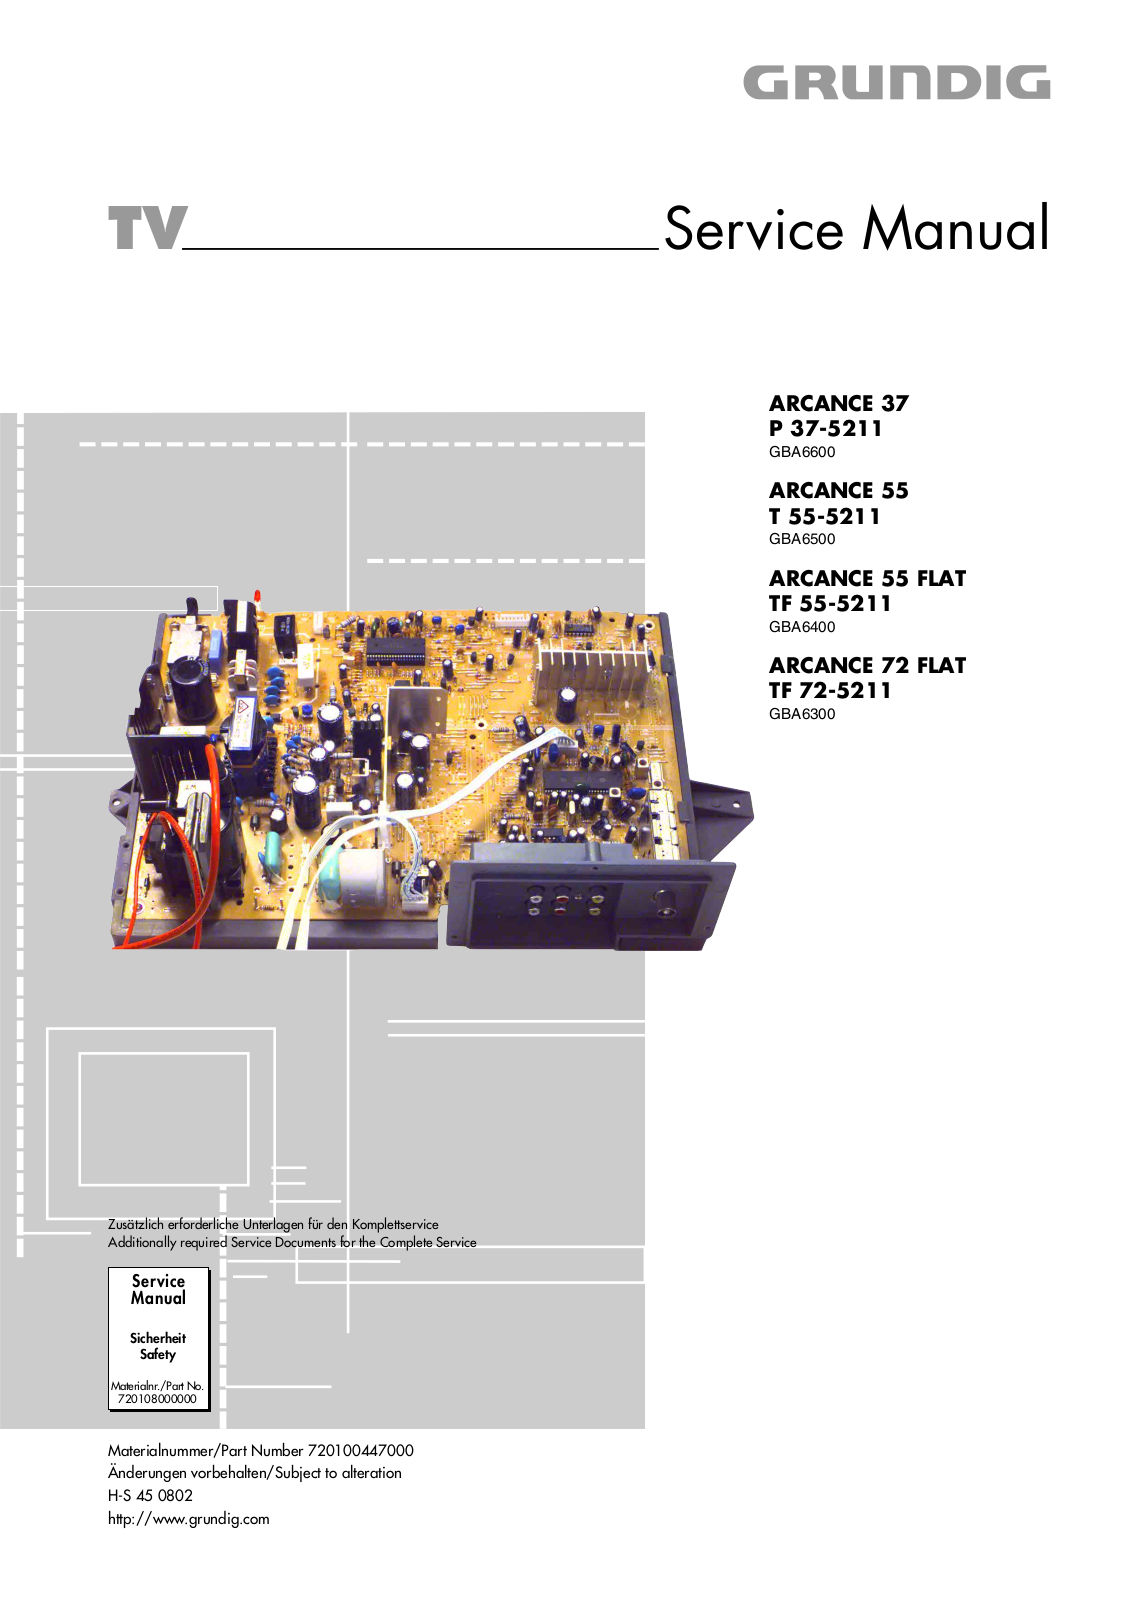 Grundig ARCANCE 37, ARCANCE 55 FLAT, ARCANCE 55, ARCANCE 72 FLAT, P 37-5211 Service Manual